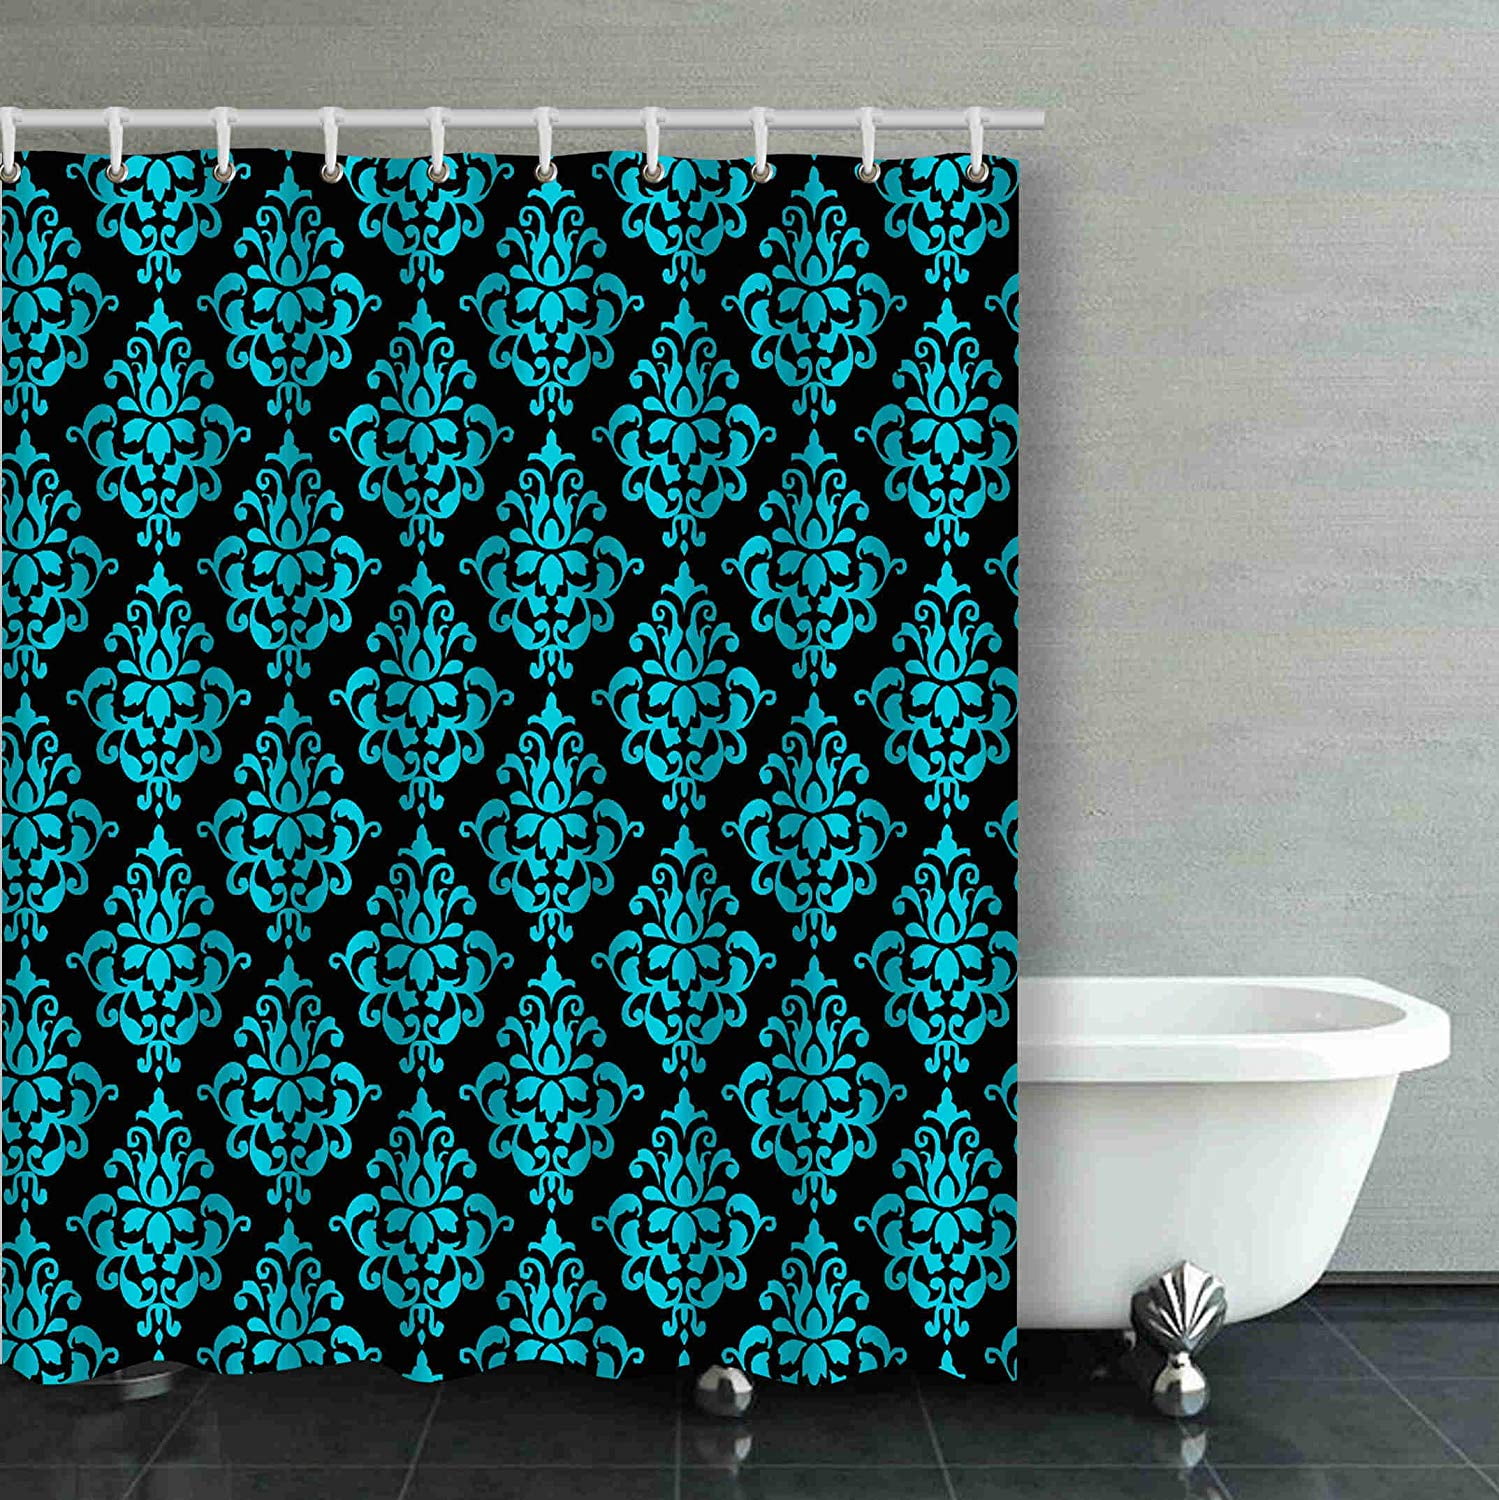 Artjia Teal Blue And Black Fl, Fancy Bathroom Shower Curtains